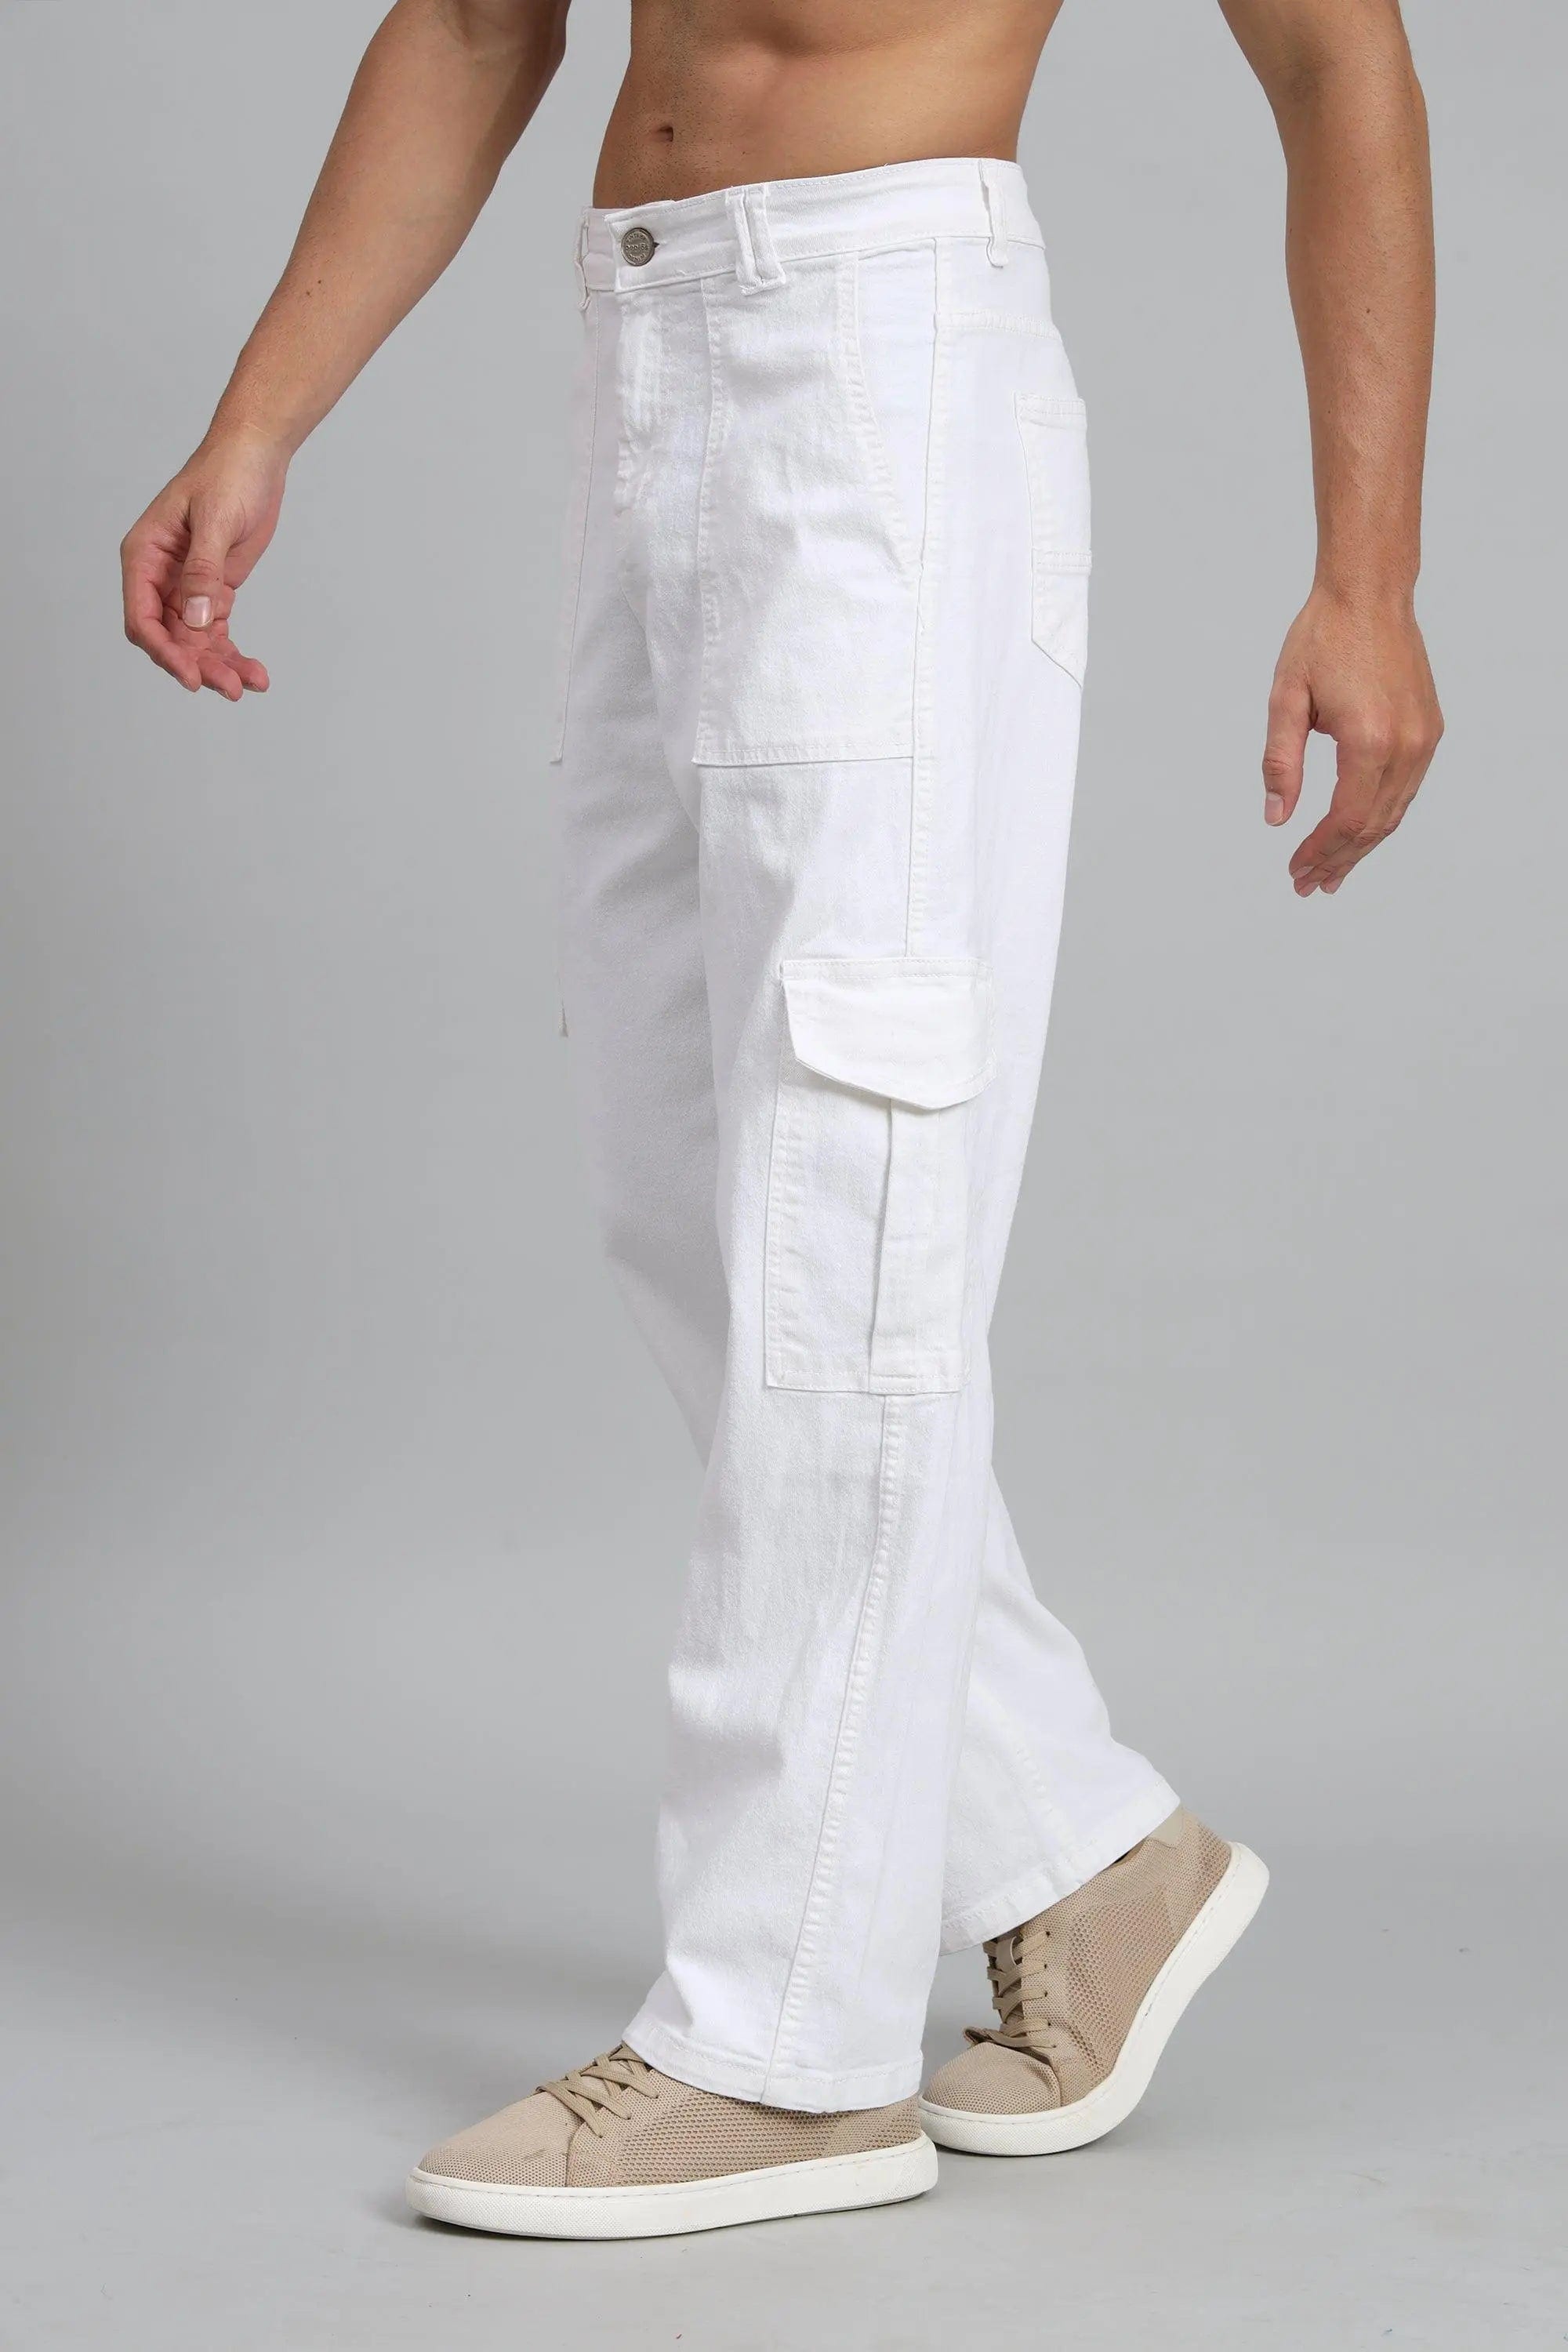 Women's Stretch Canvas Cargo Pants, Mid-Rise Straight-Leg | Pants at  L.L.Bean